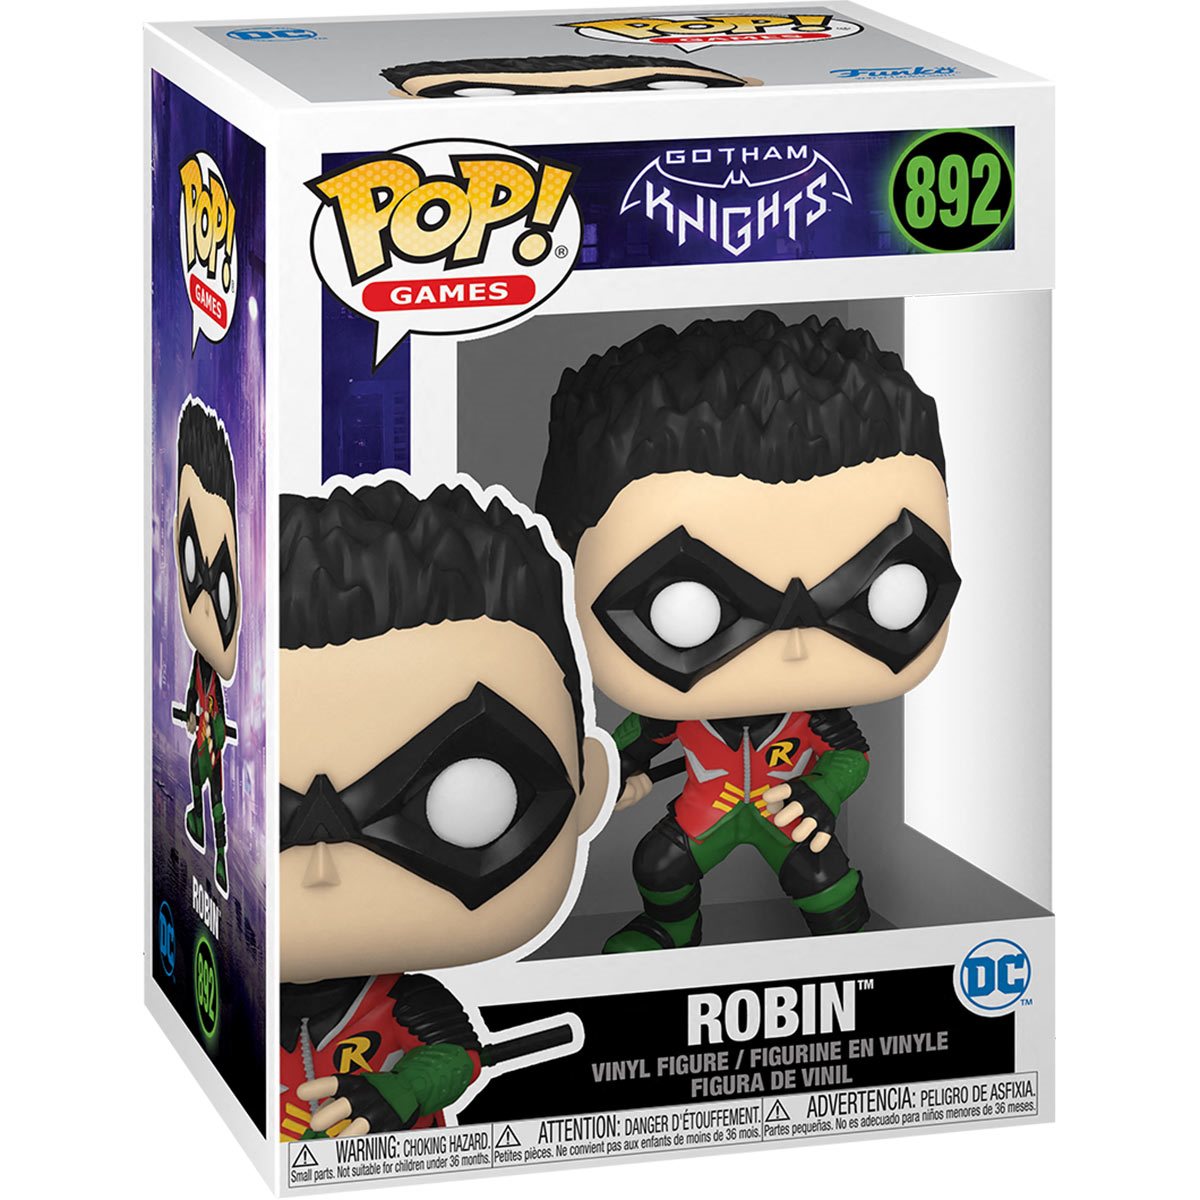 Gotham Knights Robin #892 Pop! Vinyl Figure